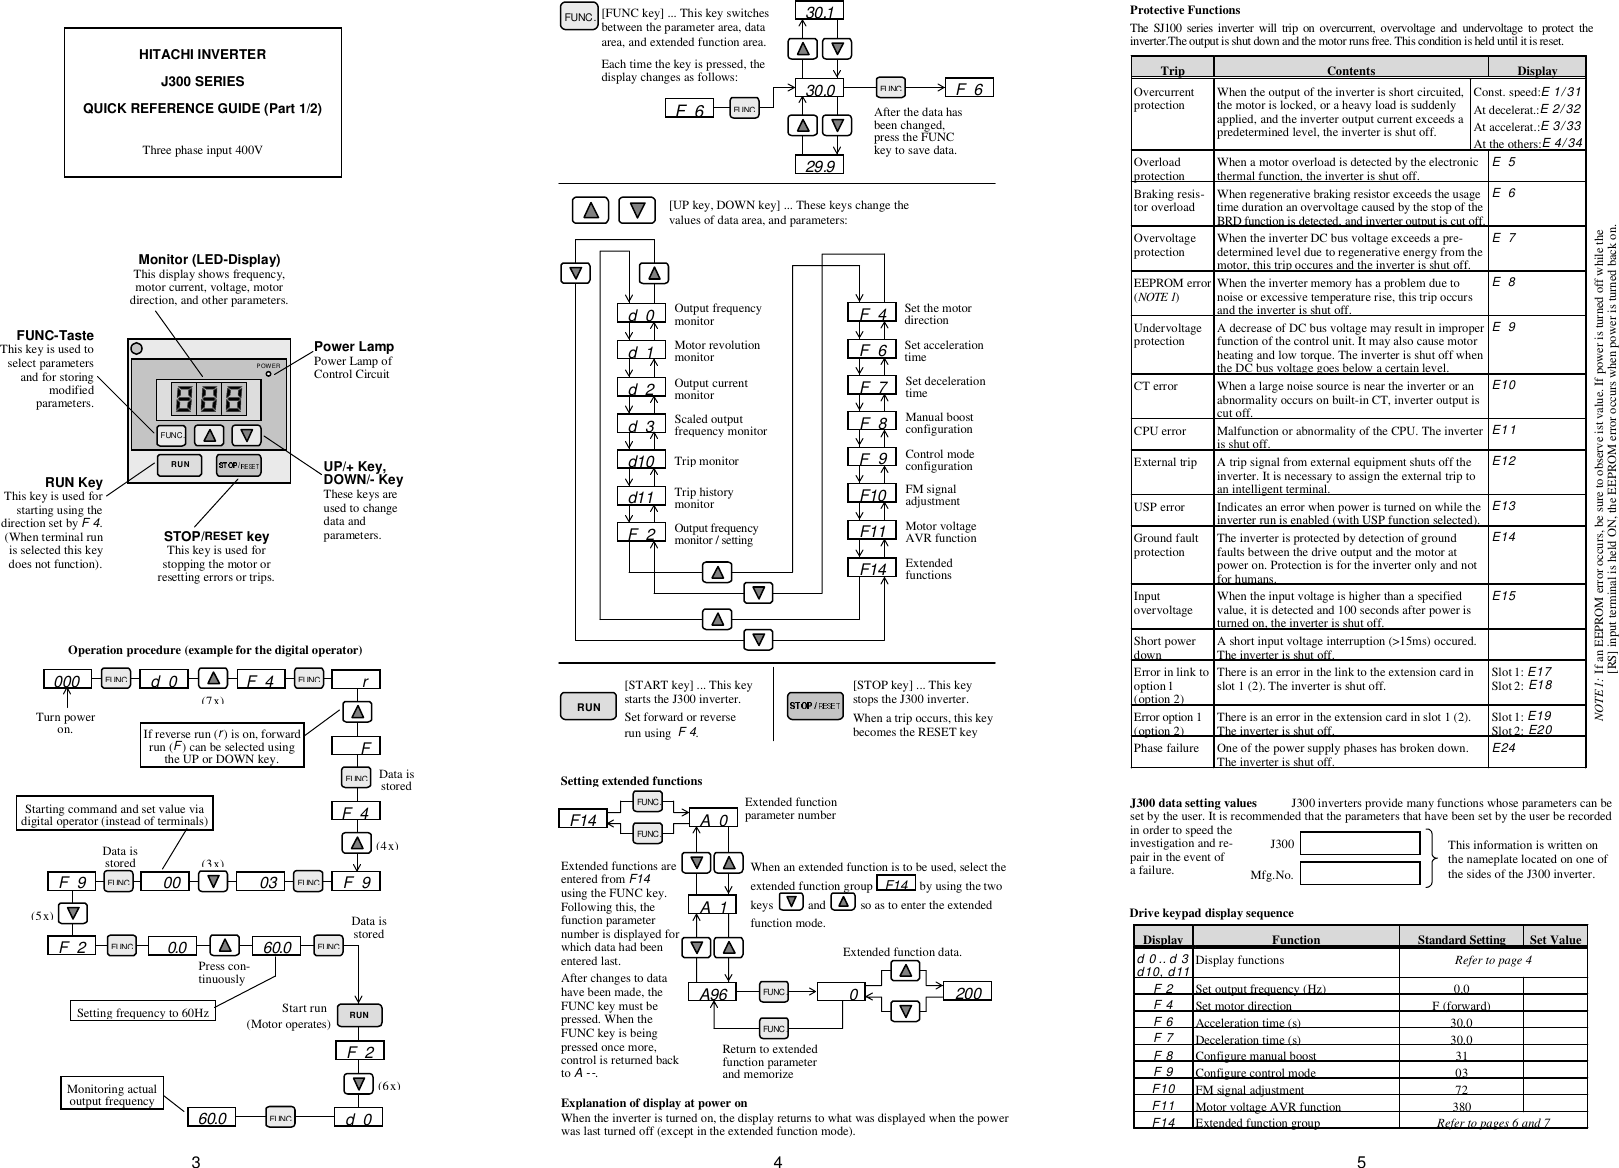 Page 3 of 6 - Hitachi Hitachi-Inverter-J300-Users-Manual-  Hitachi-inverter-j300-users-manual